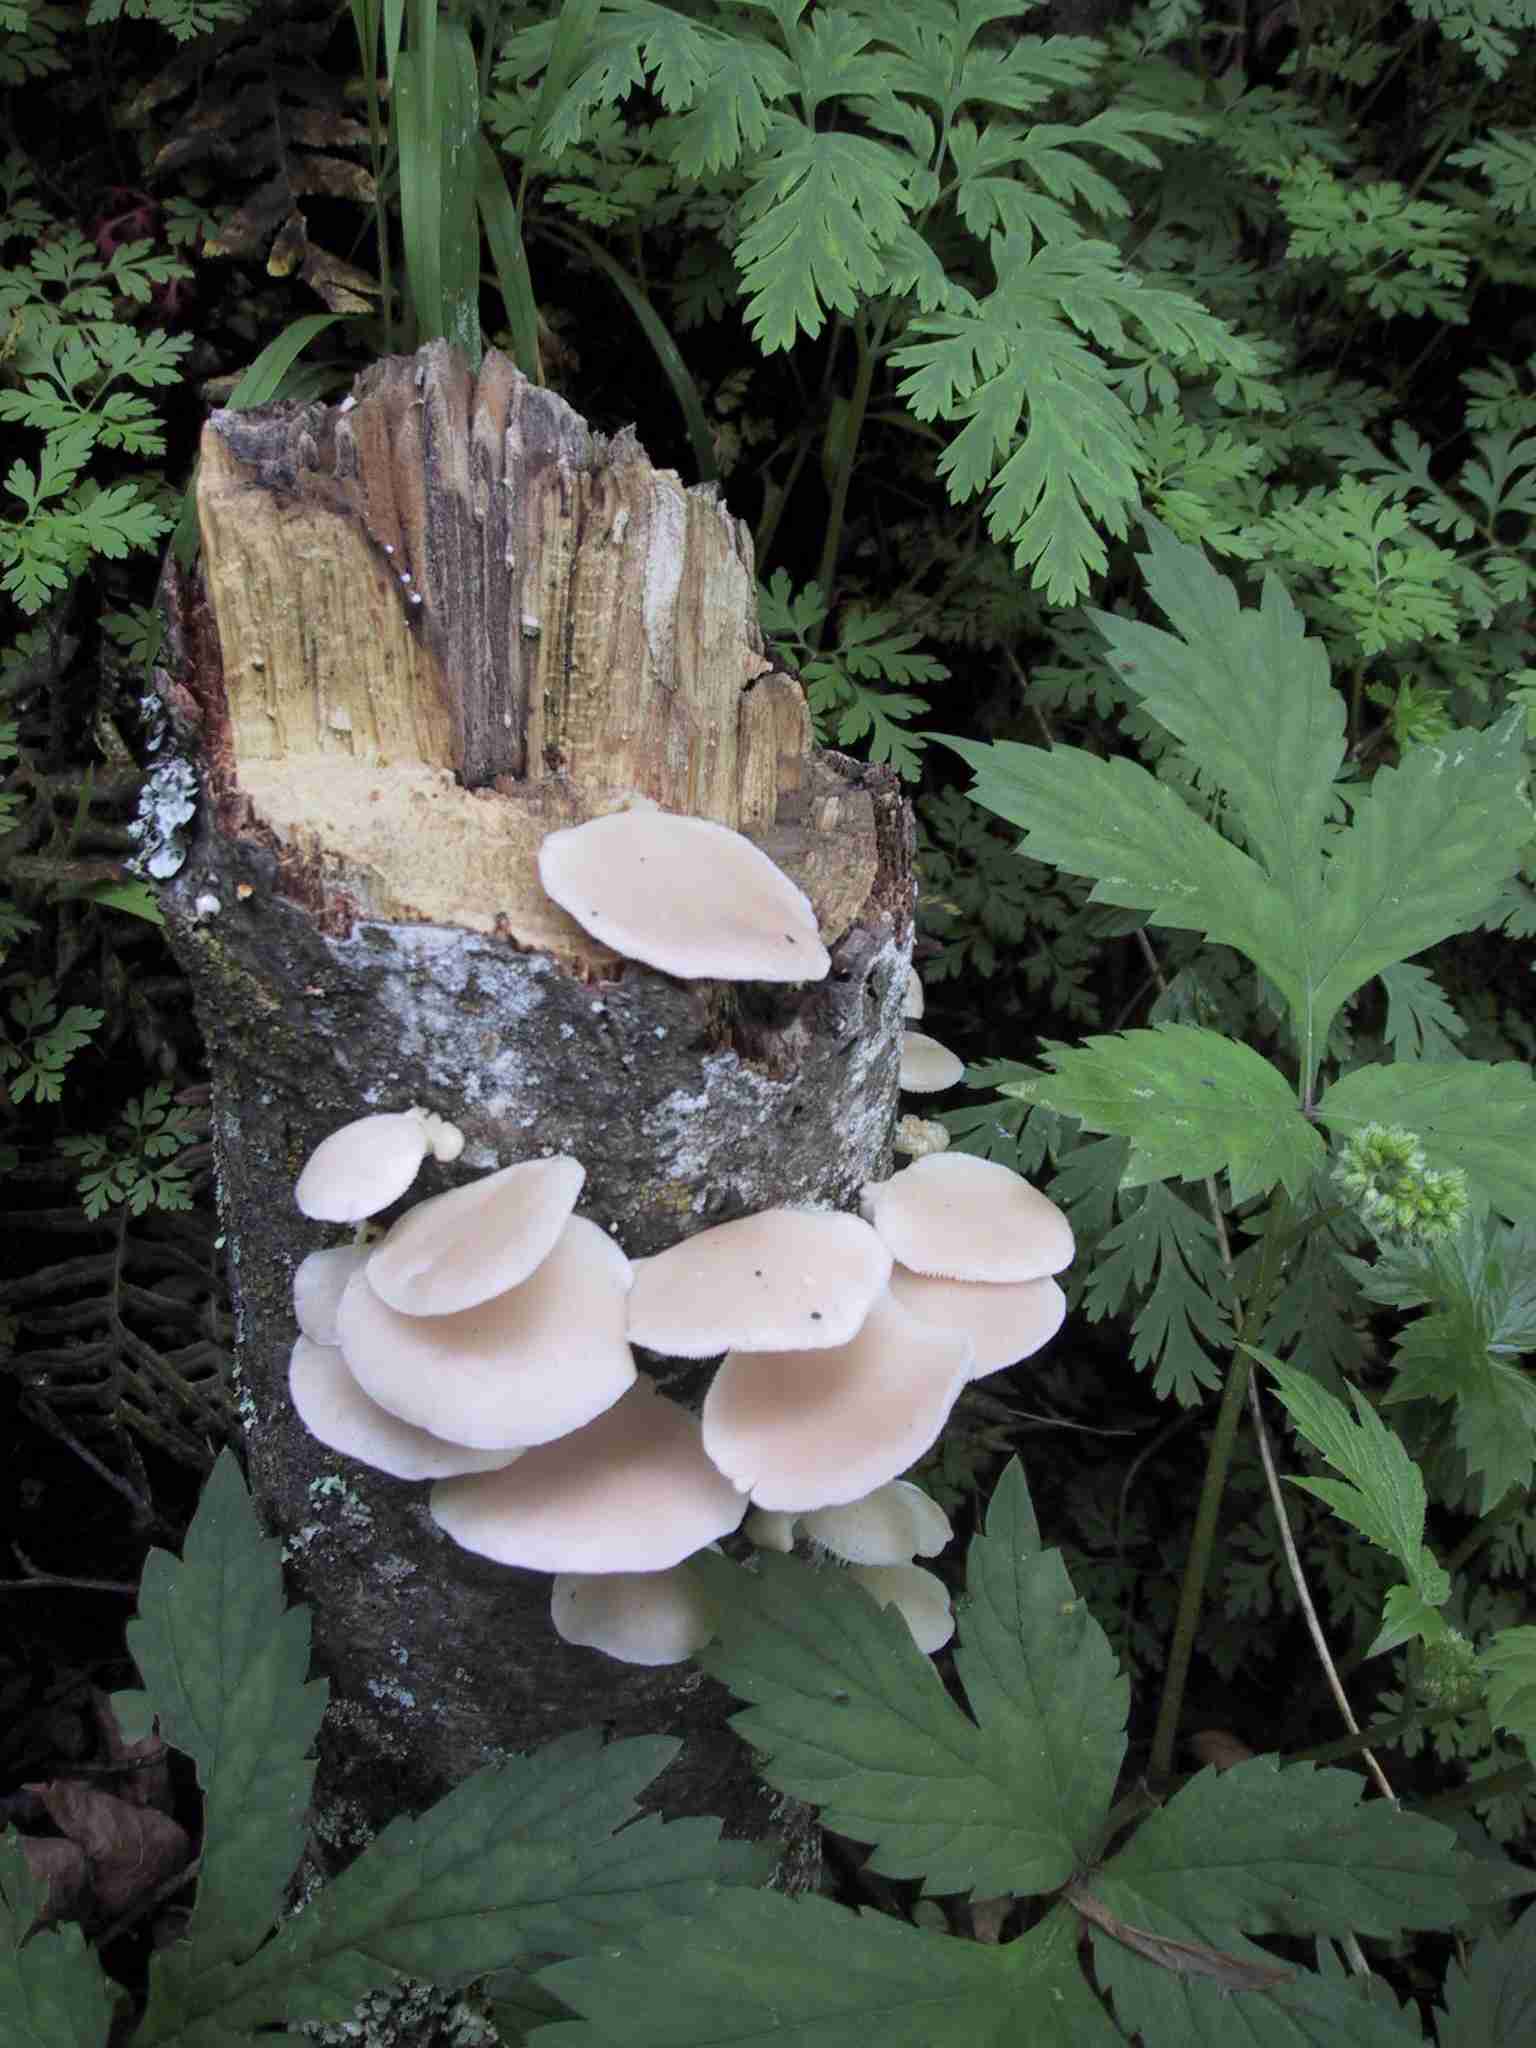 Fungi on a stump